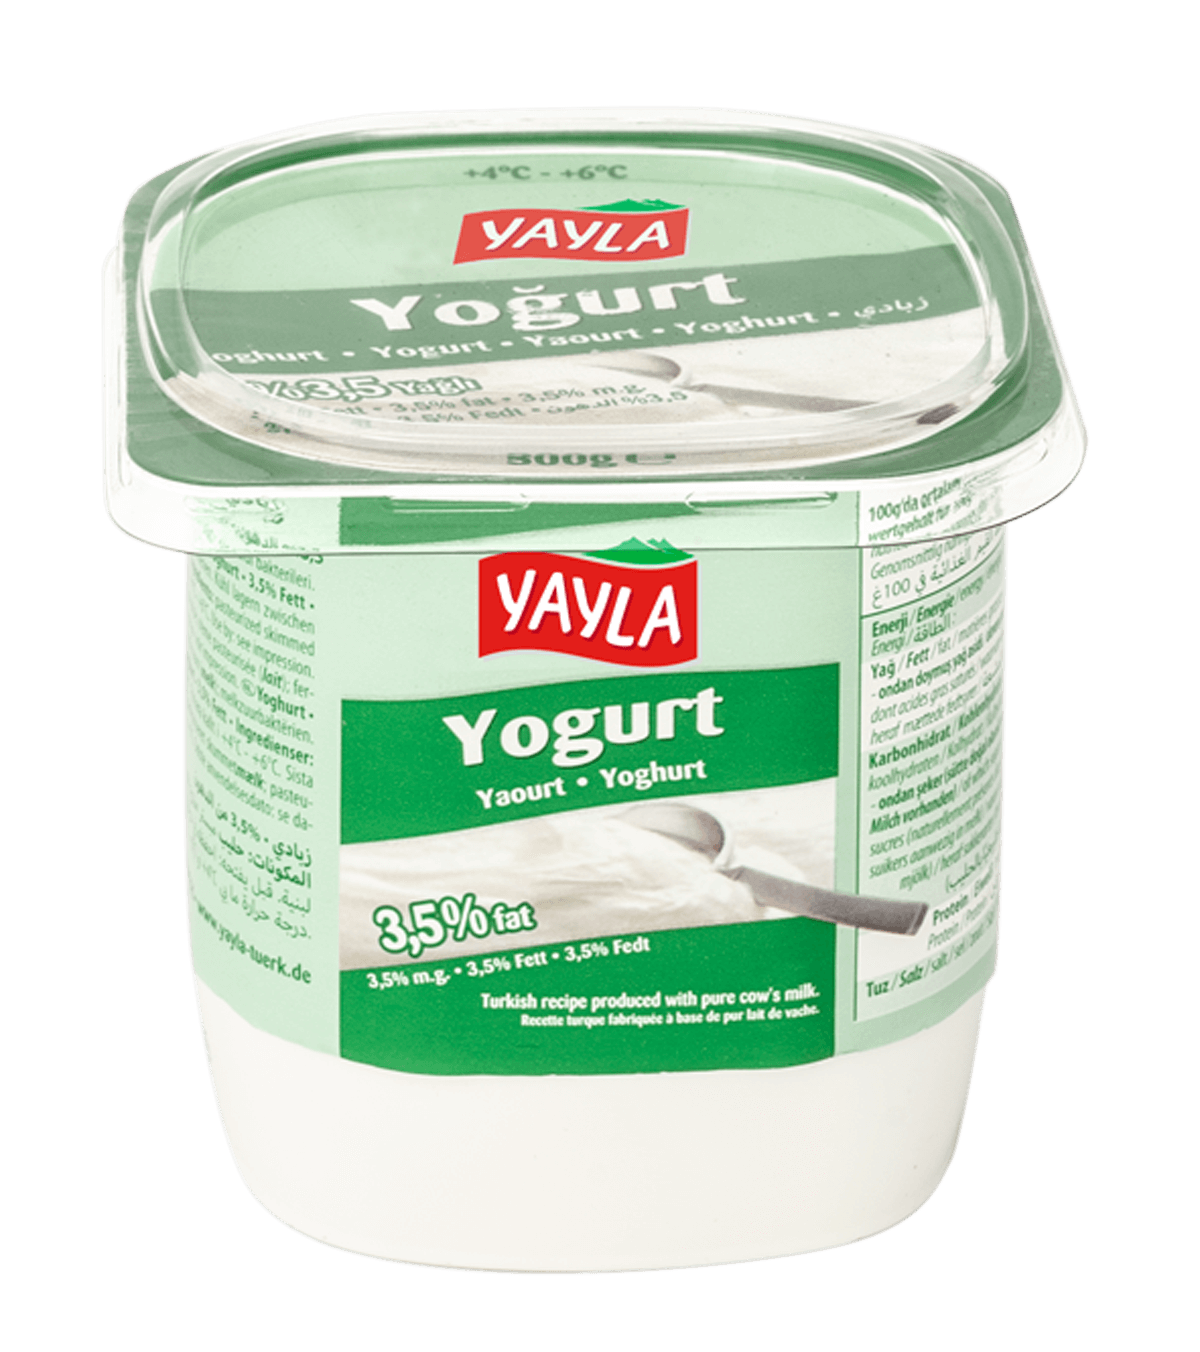 Yayla Yogurt / Joghurt 3,5% 500g